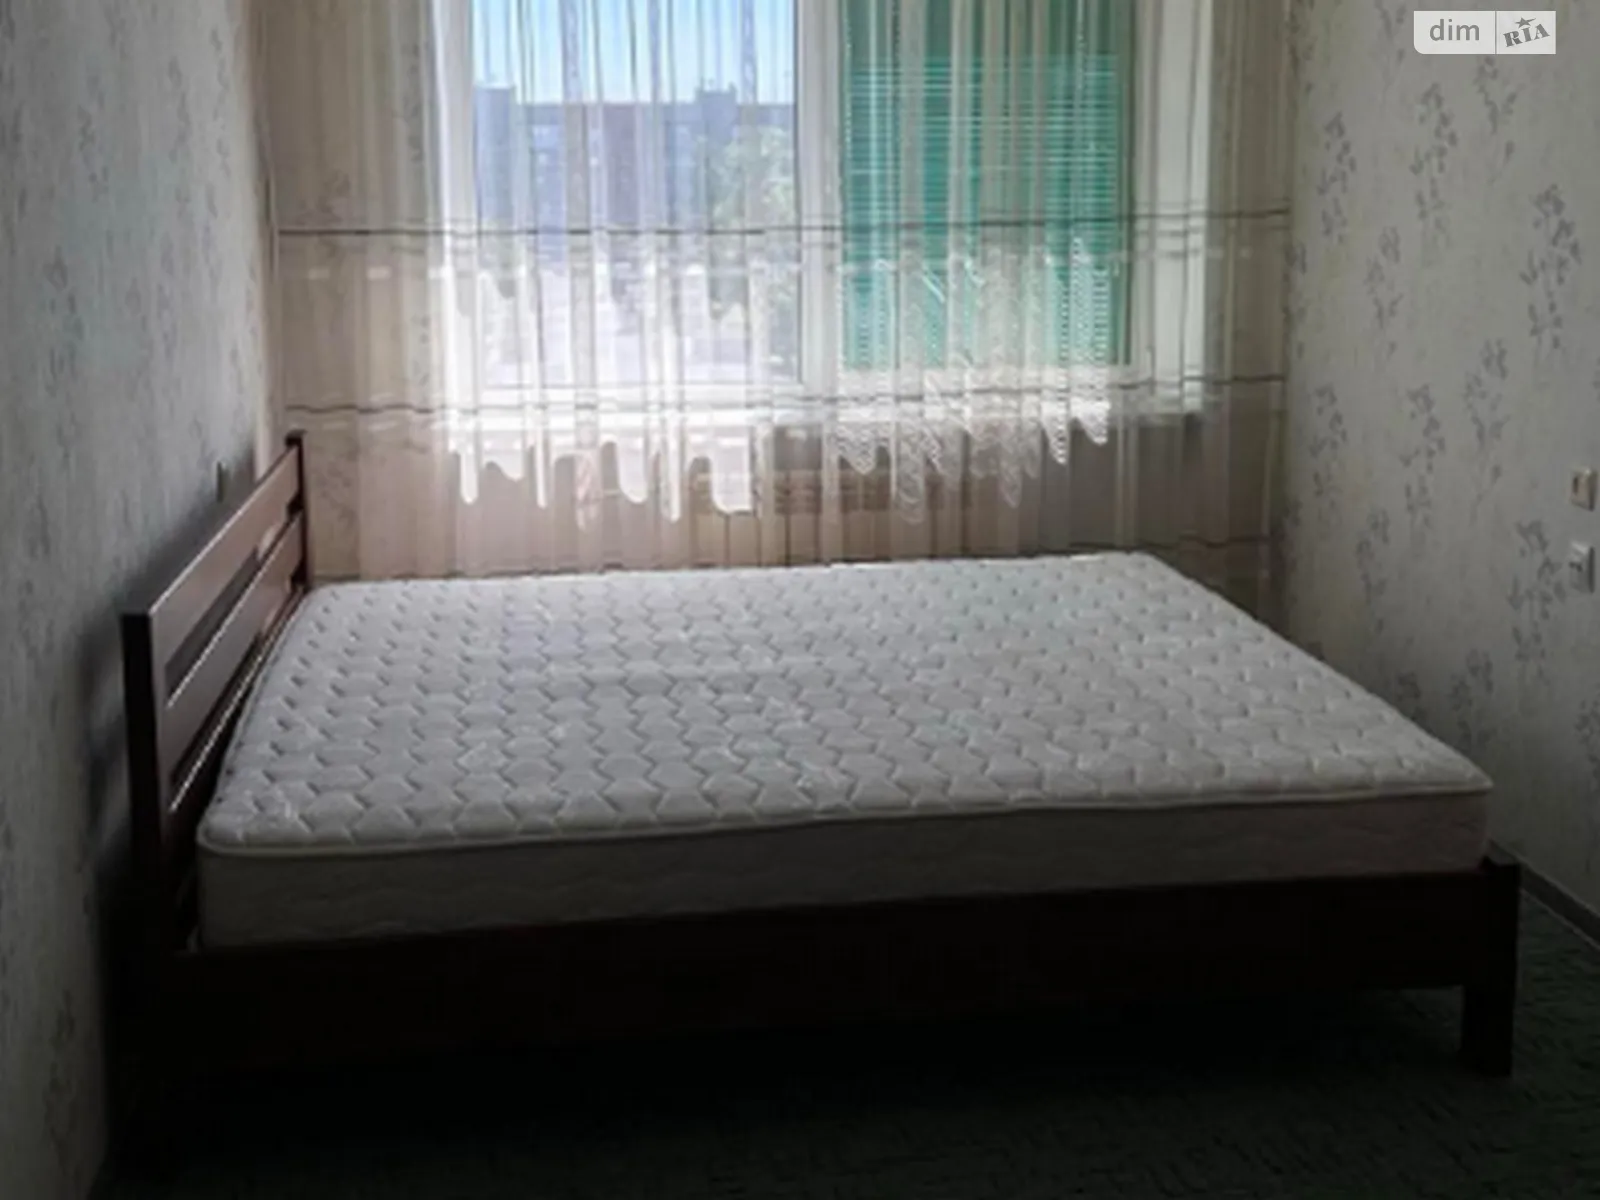 Сдается в аренду 2-комнатная квартира 52 кв. м в Одессе, ул. Академика Филатова - фото 1